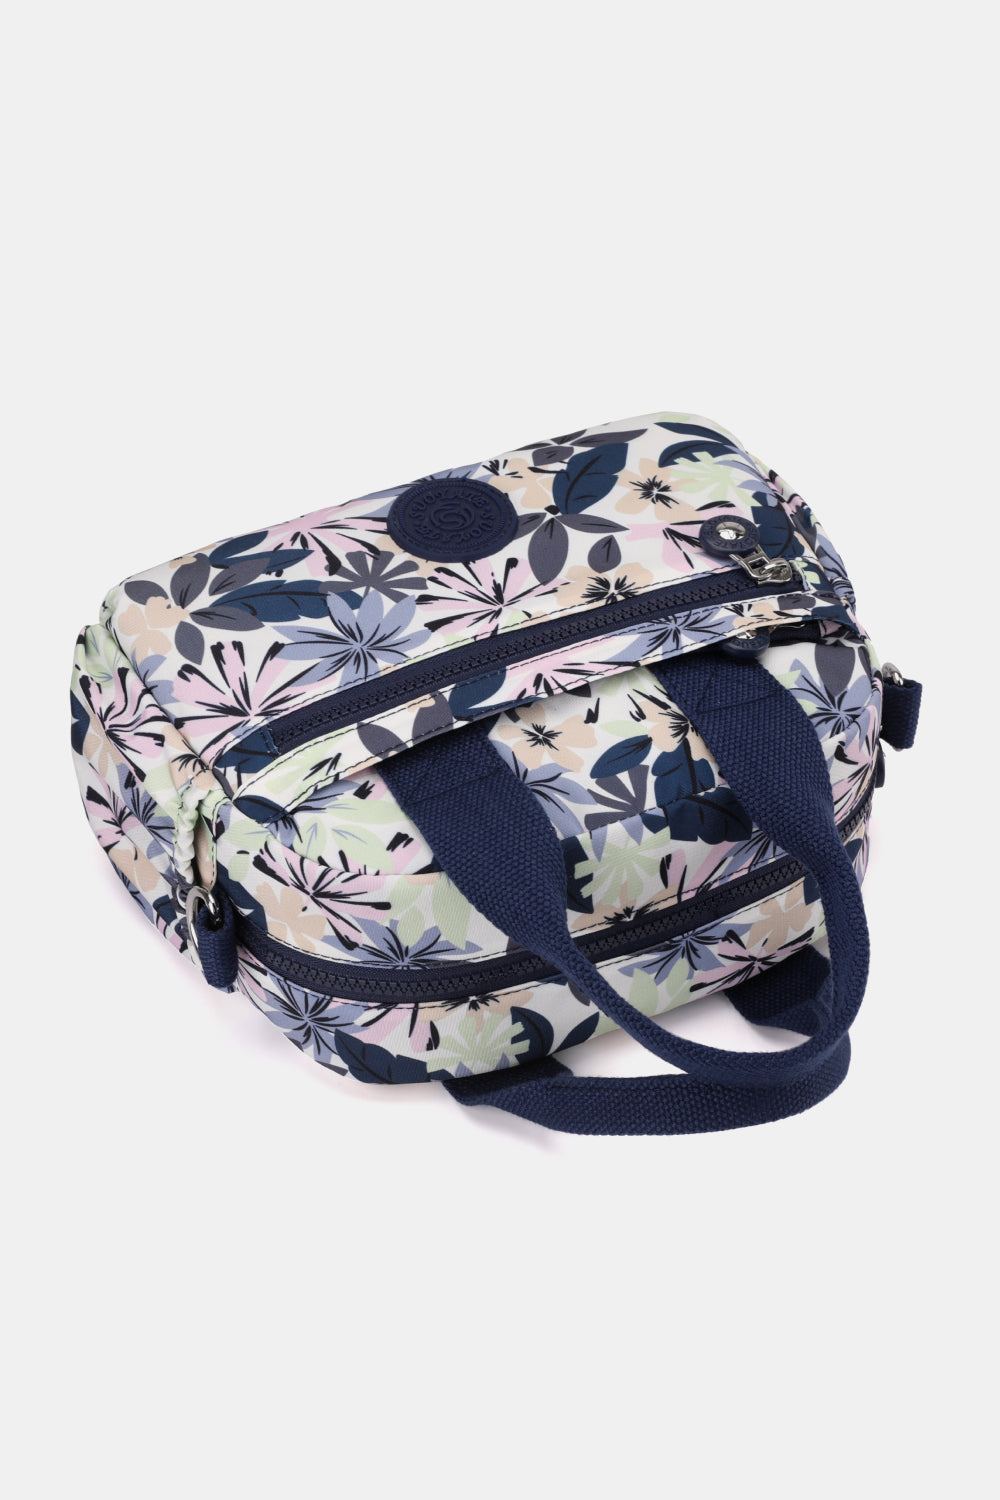 SO CHIC Floral Nylon Handbag